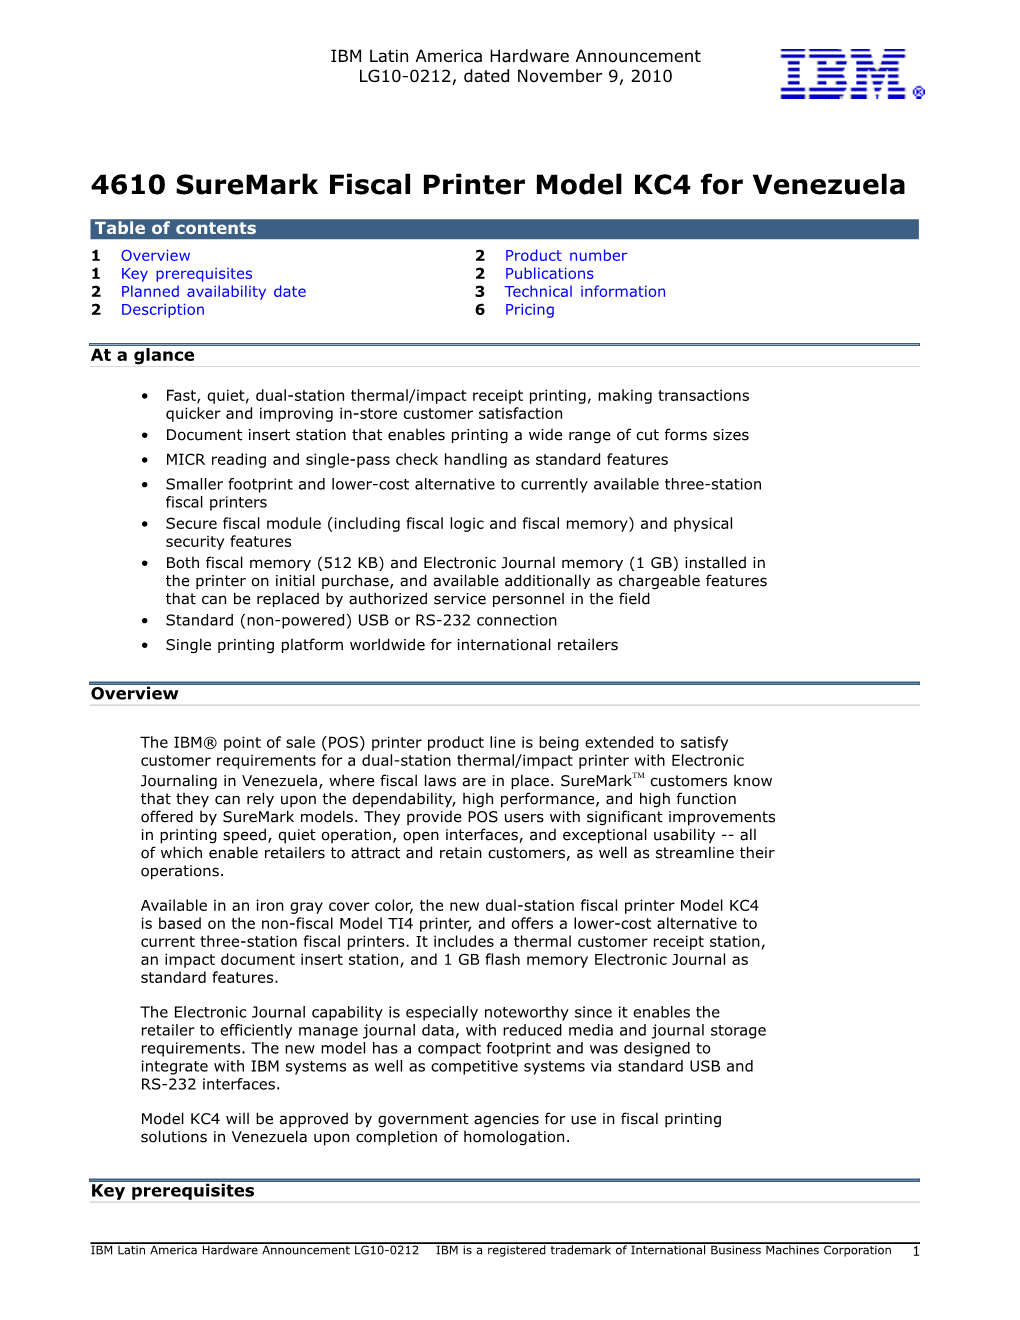 4610 Suremark Fiscal Printer Model KC4 for Venezuela